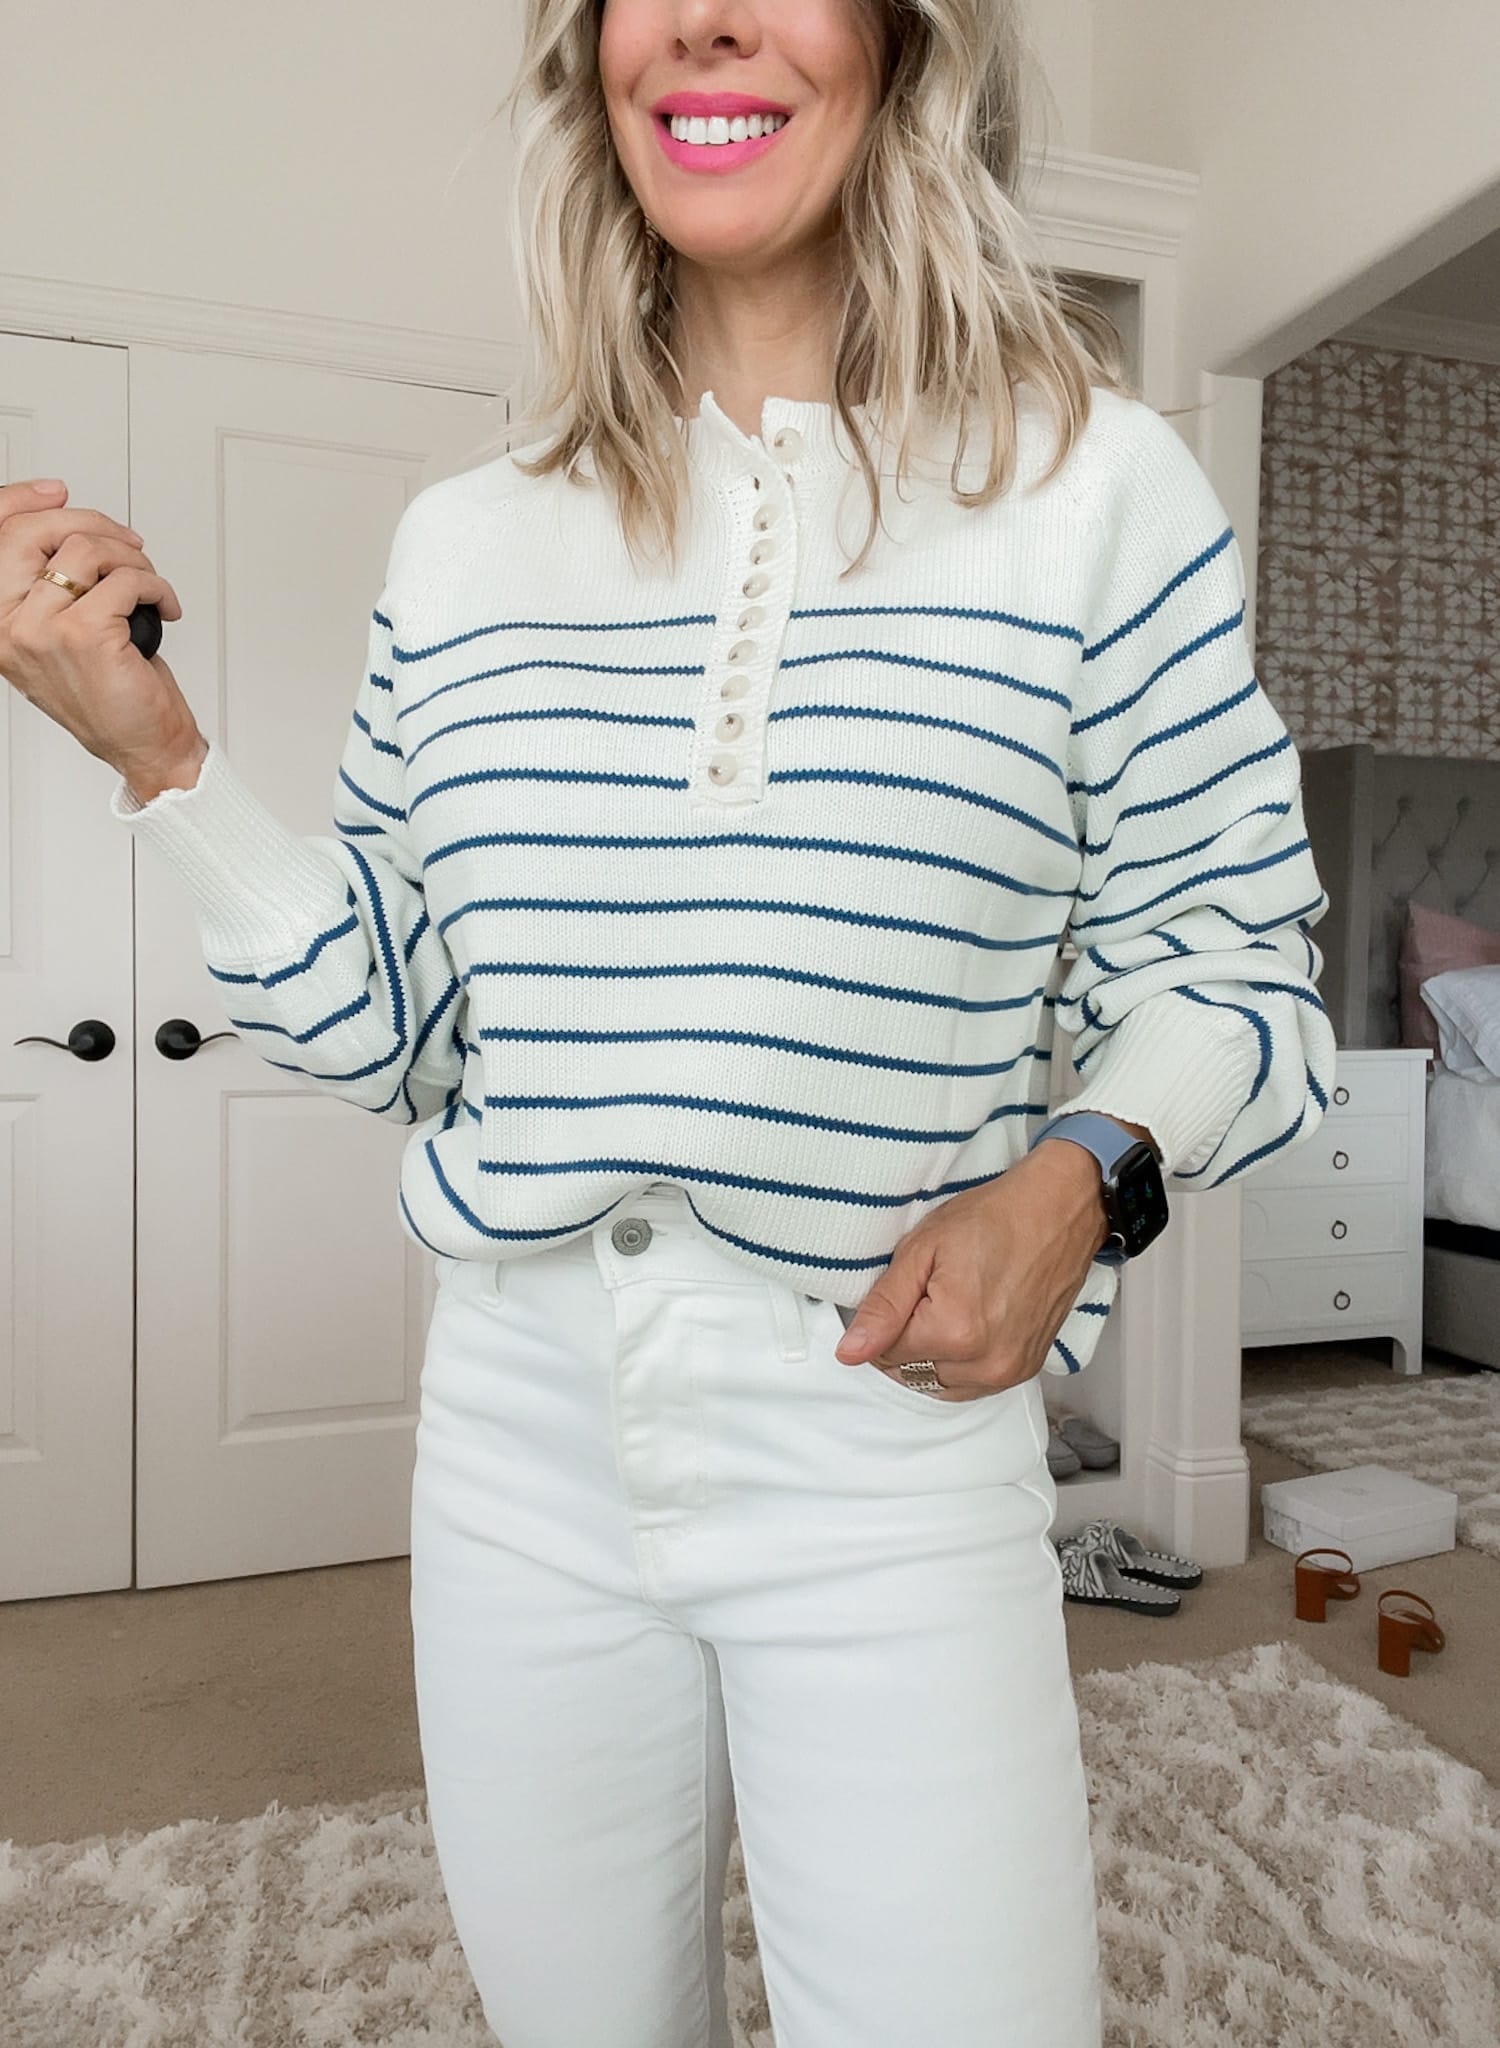 Amazon Fashion, Striped Sweater, Jeans